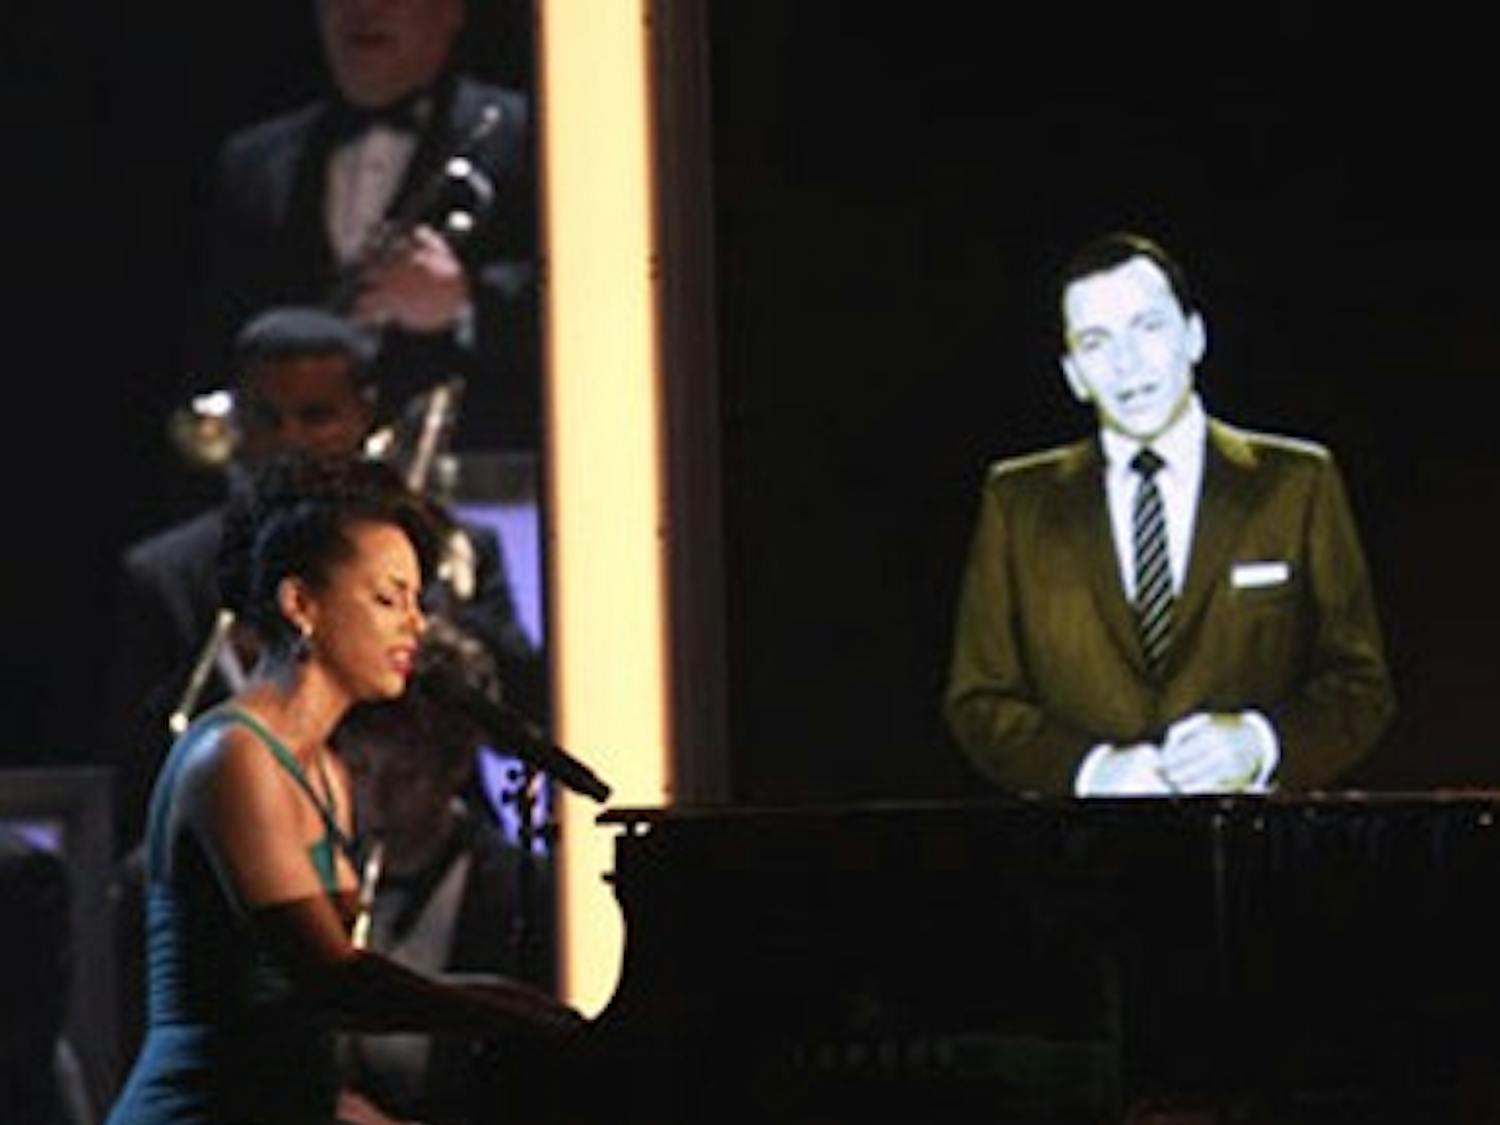 Sinatra & Grammys: strangers in the night